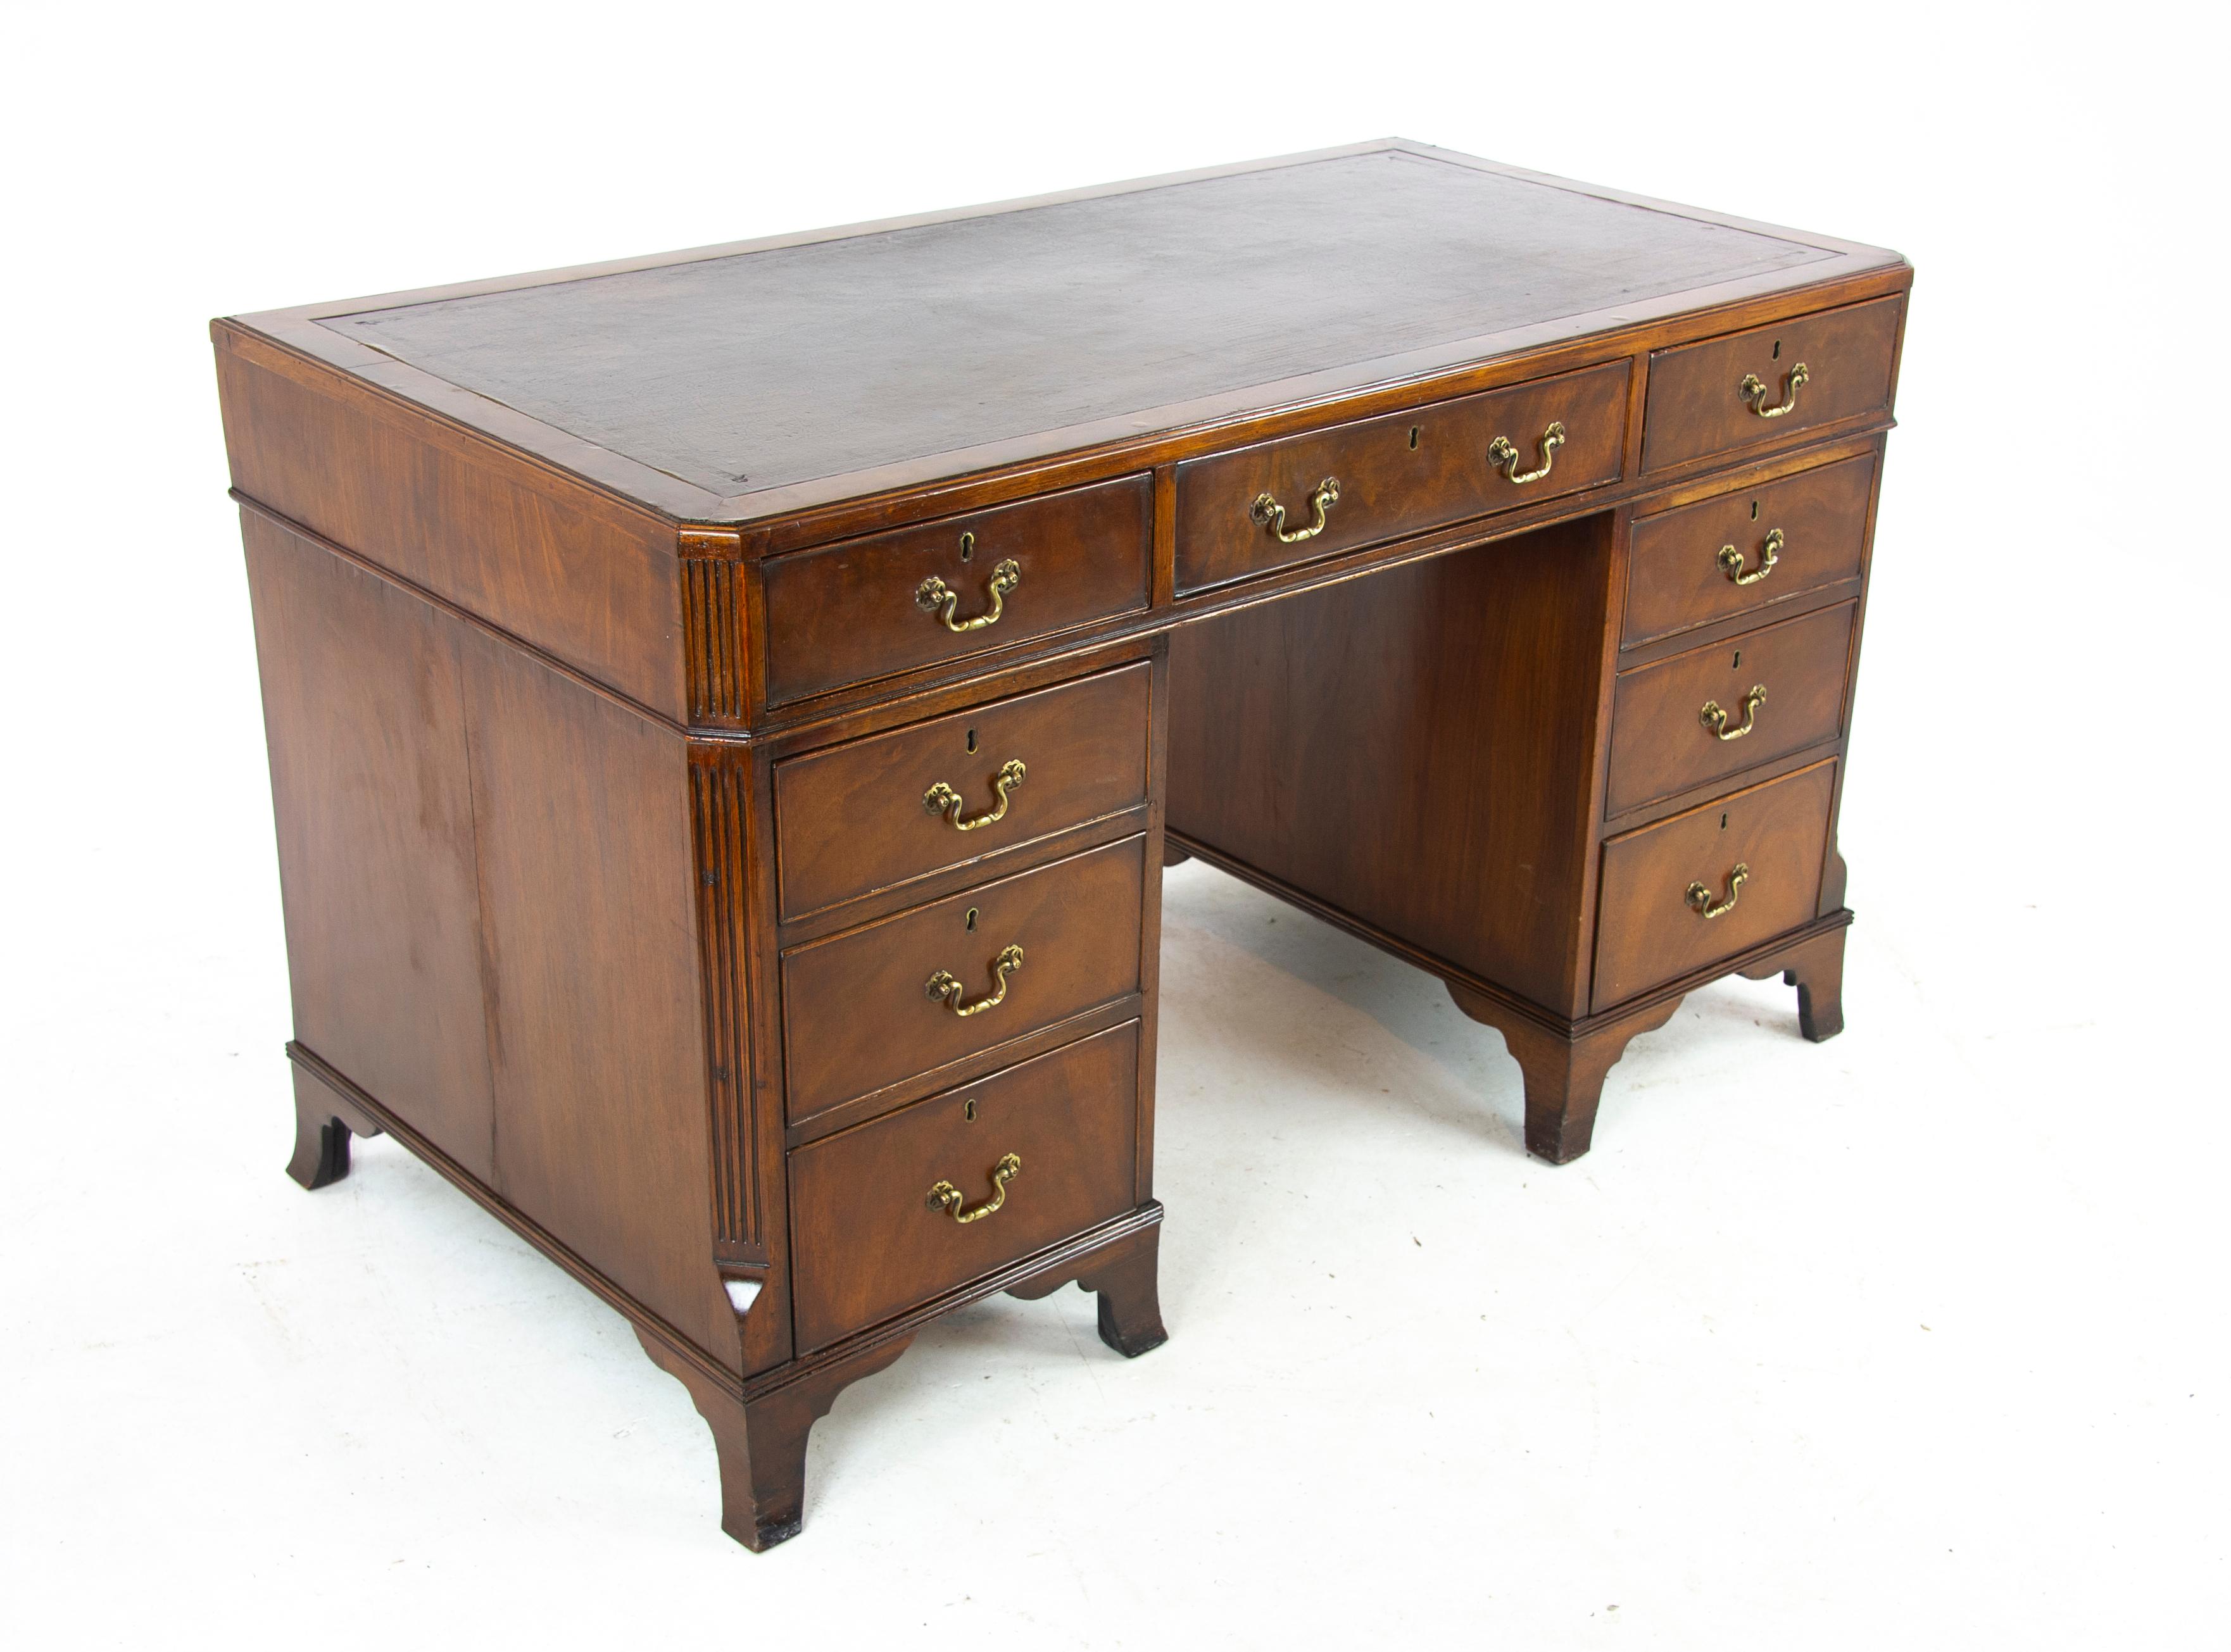 Double Pedestal Desk, Walnut Desk, Leather Top, Scotland, 1920, Antiques, B1283 (Handgefertigt)